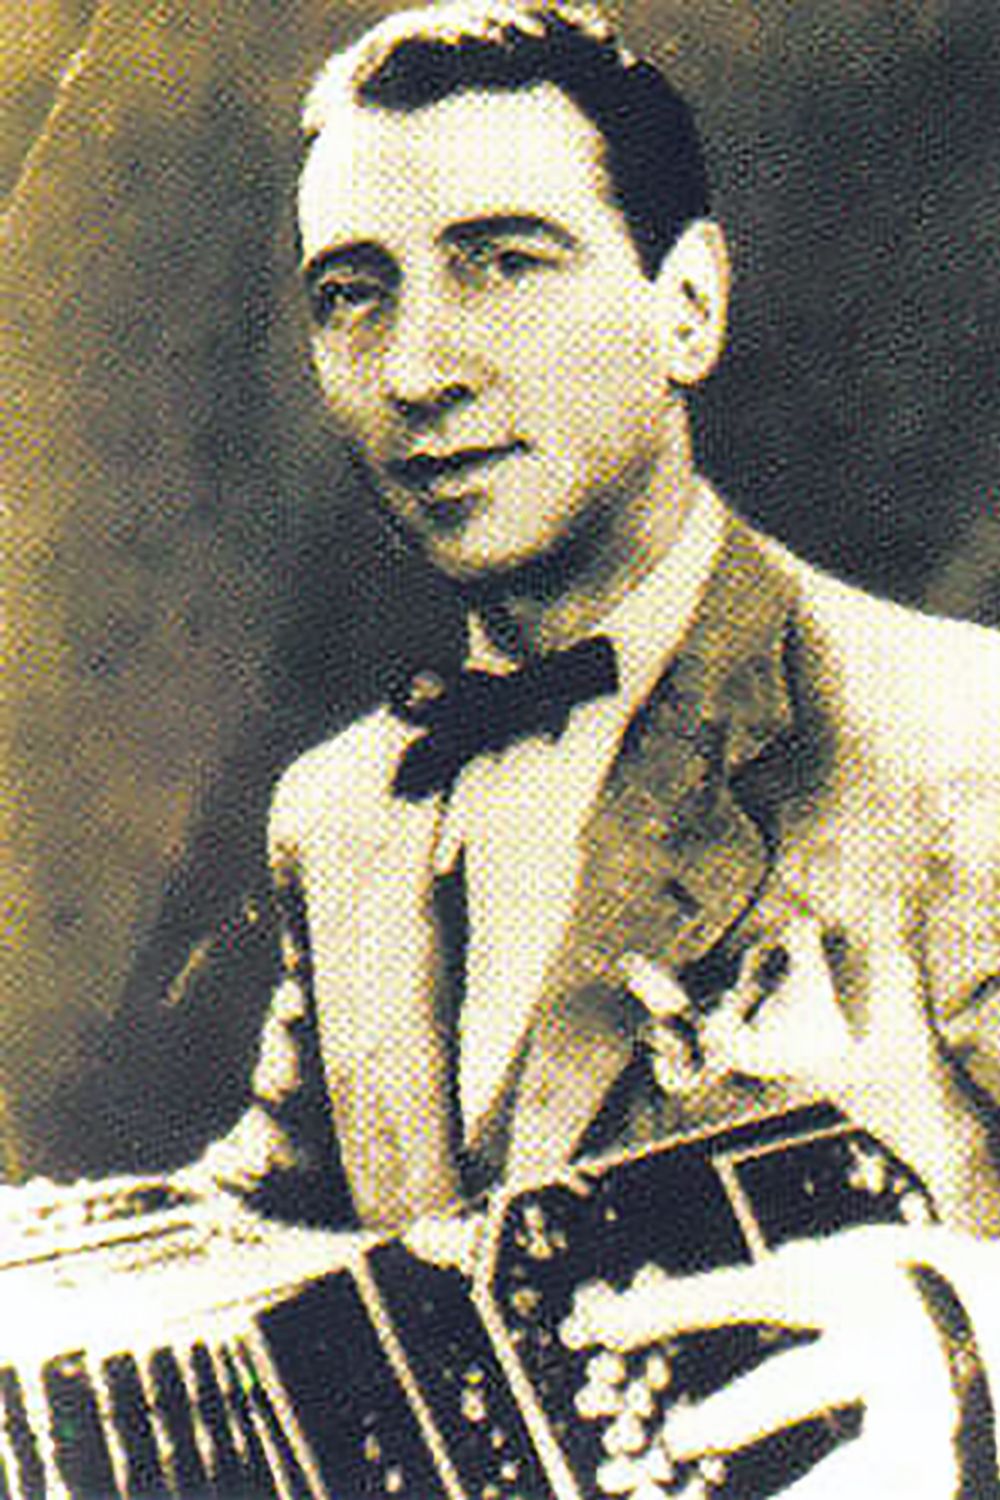 Anselmo Aieta, Argentine Tango musician, leader, and composer.